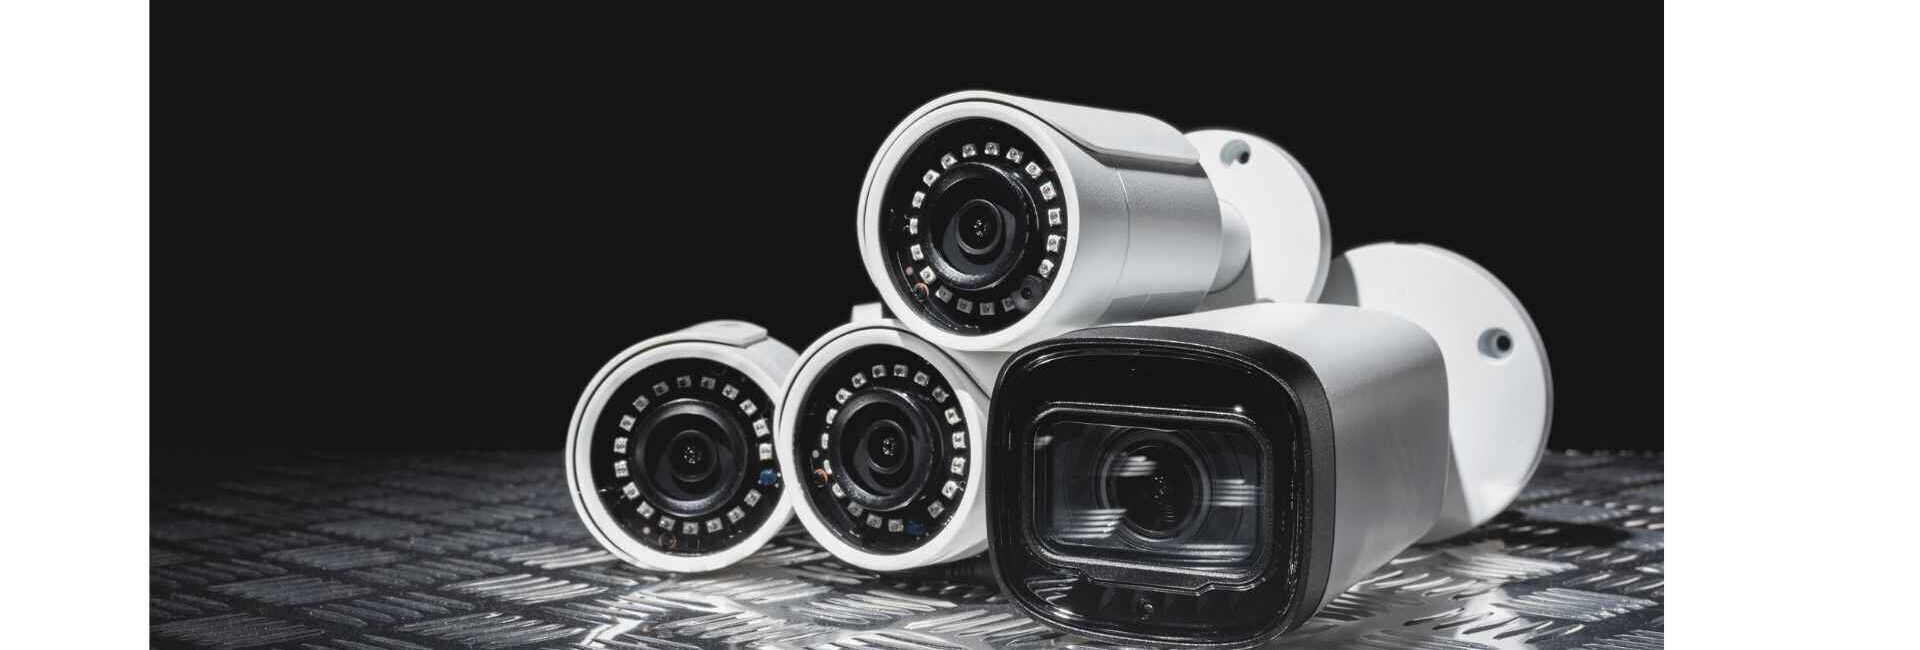 Sai security system hisar - Best CCTV Dealer in Hisar City